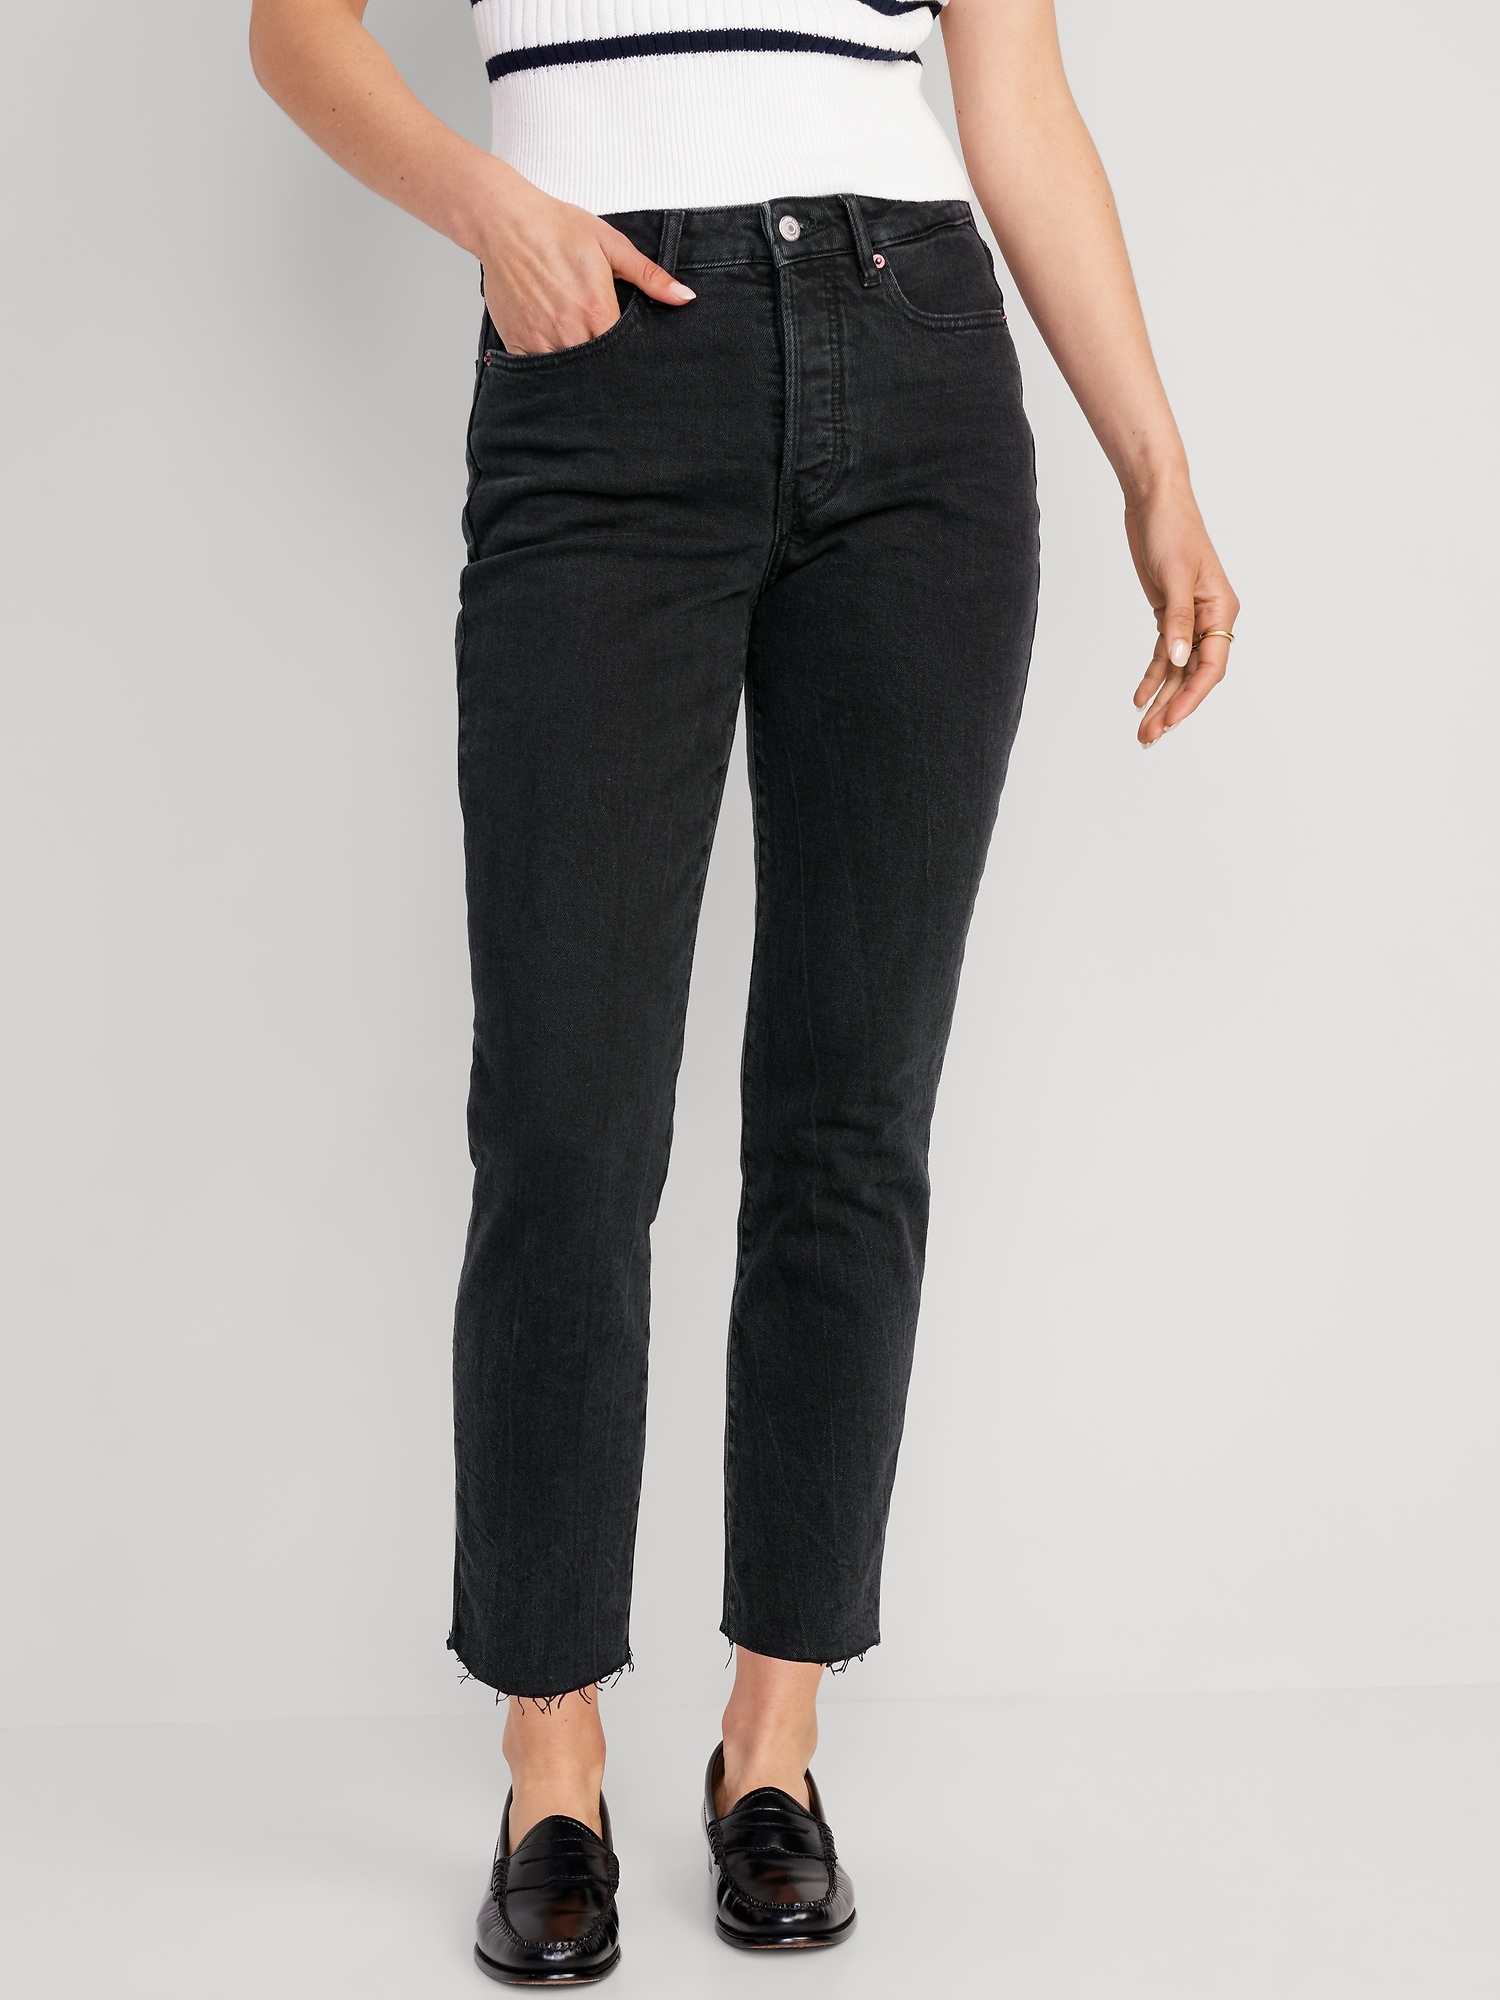 Old Navy High-Waisted OG Straight Black Cutoff Jeans for Women black. 1